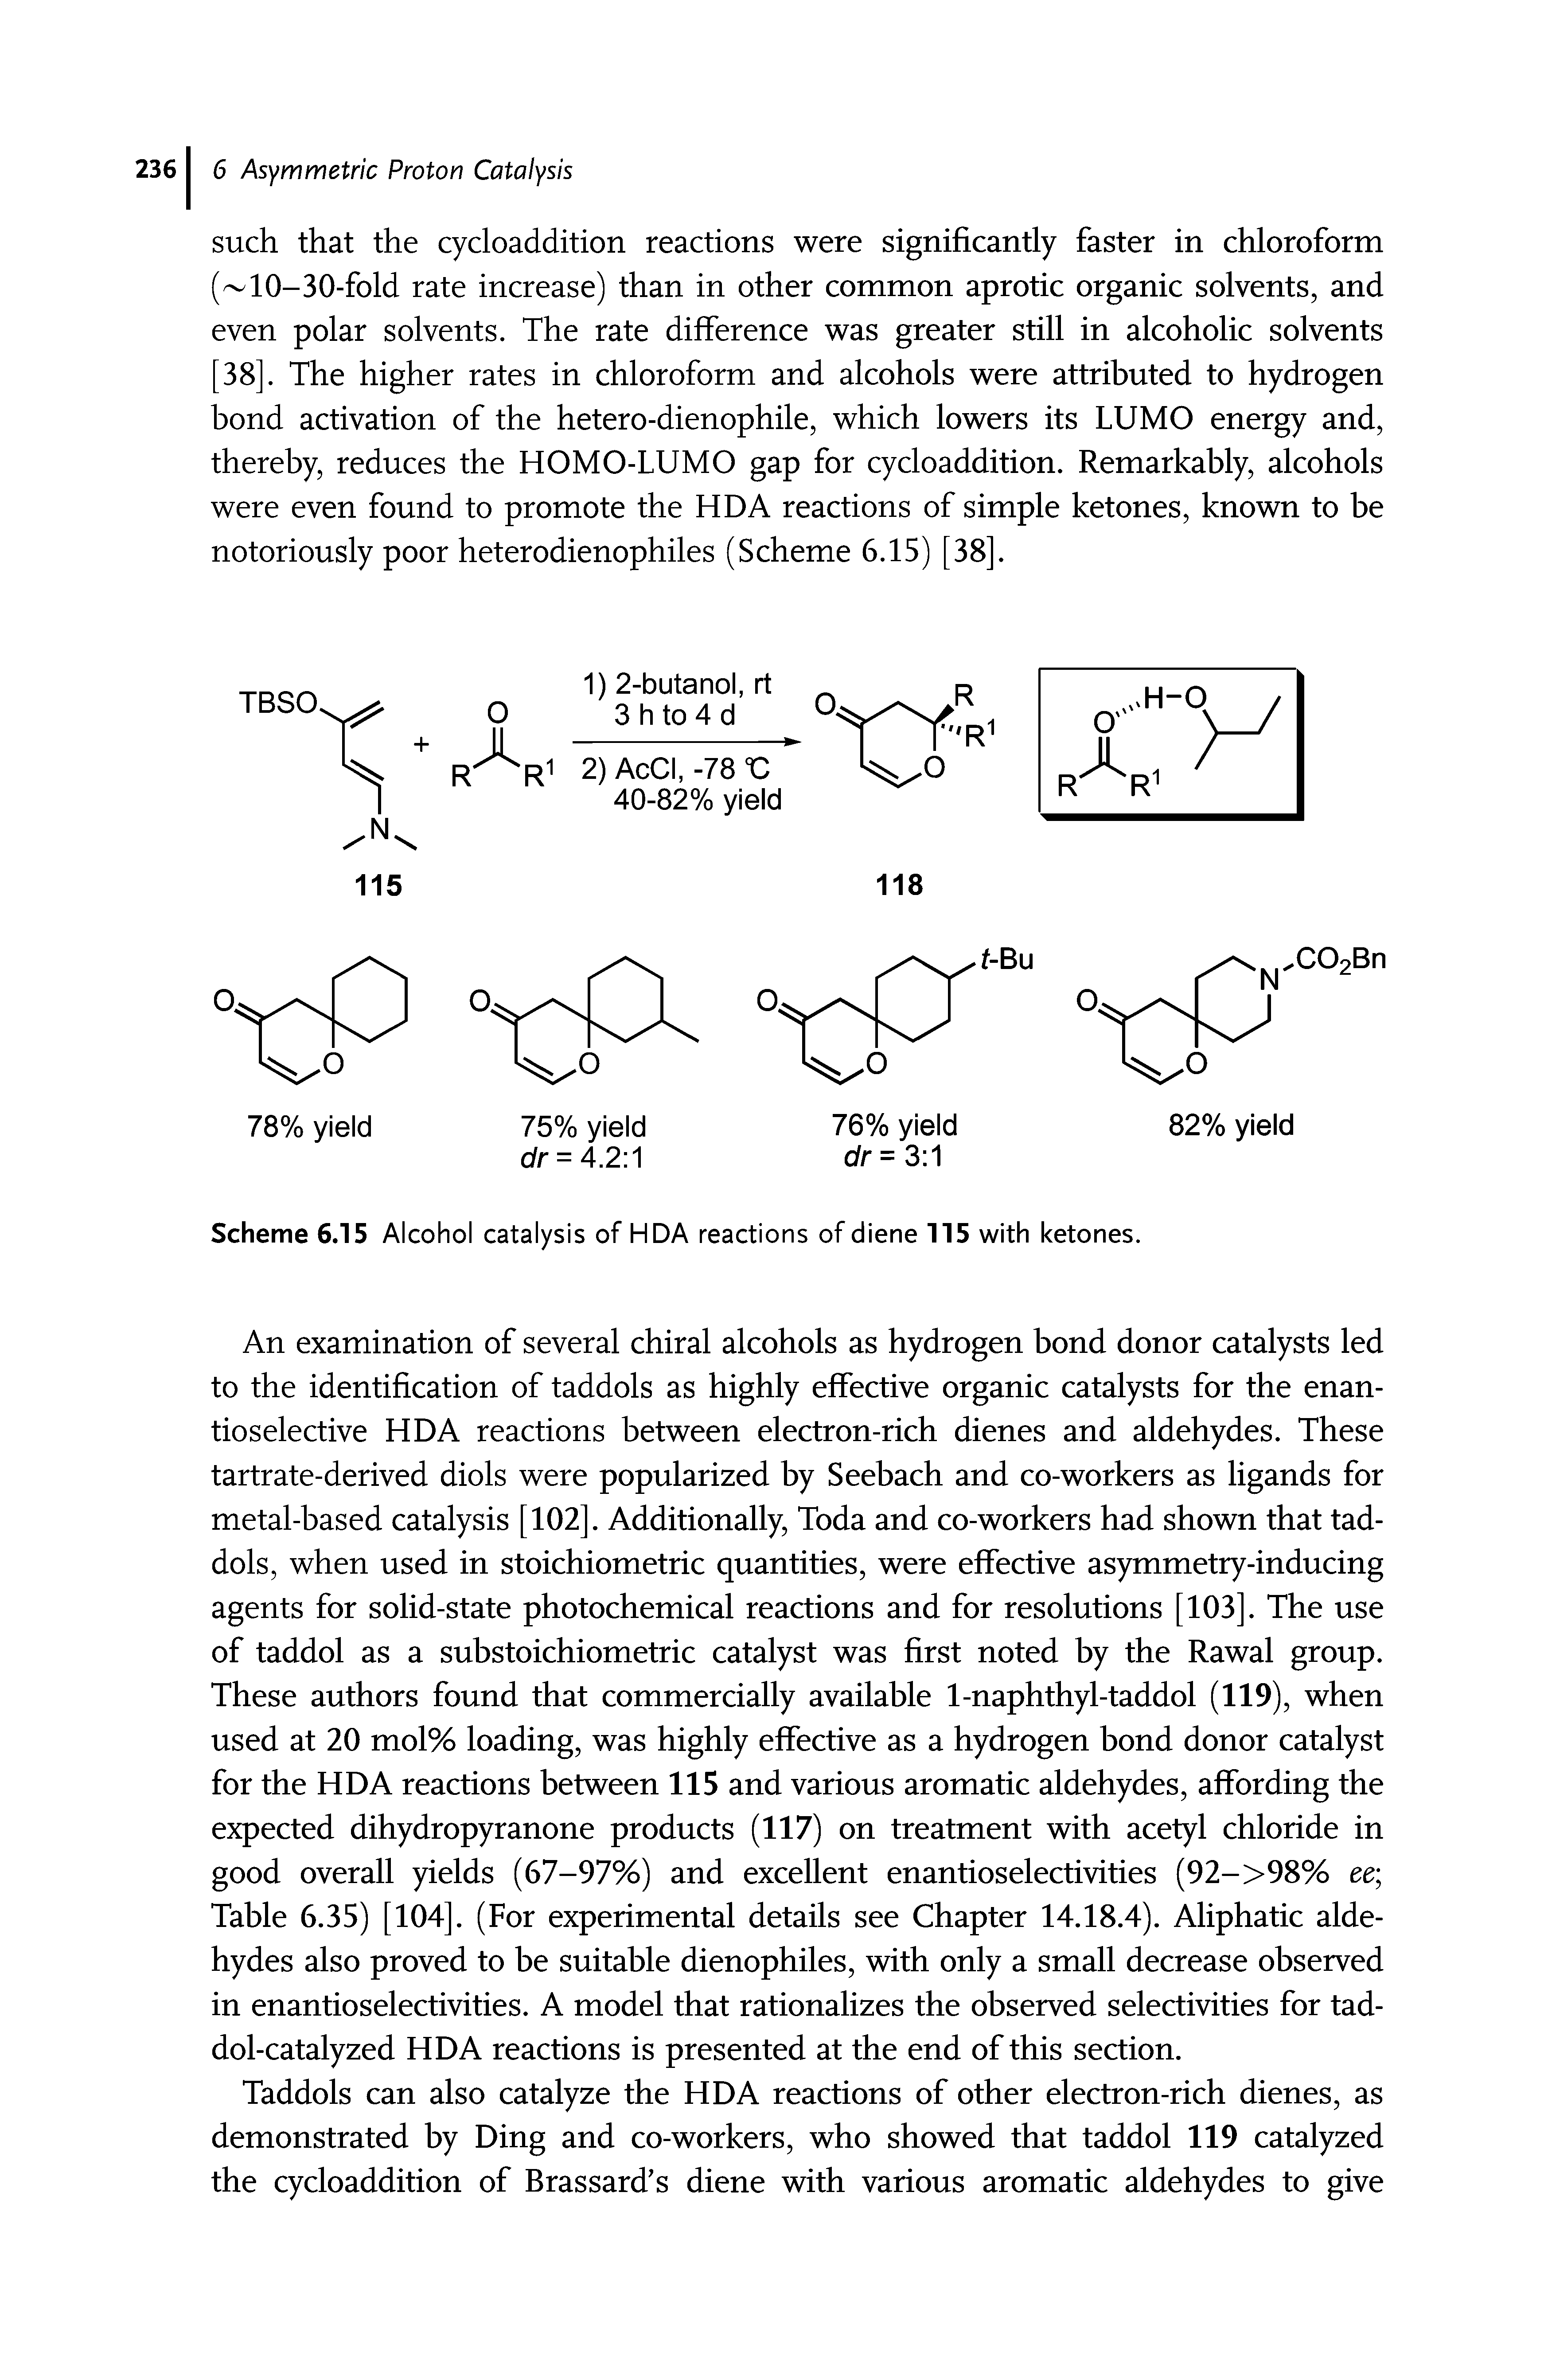 Scheme 6.15 Alcohol catalysis of HDA reactions of diene 115 with ketones.